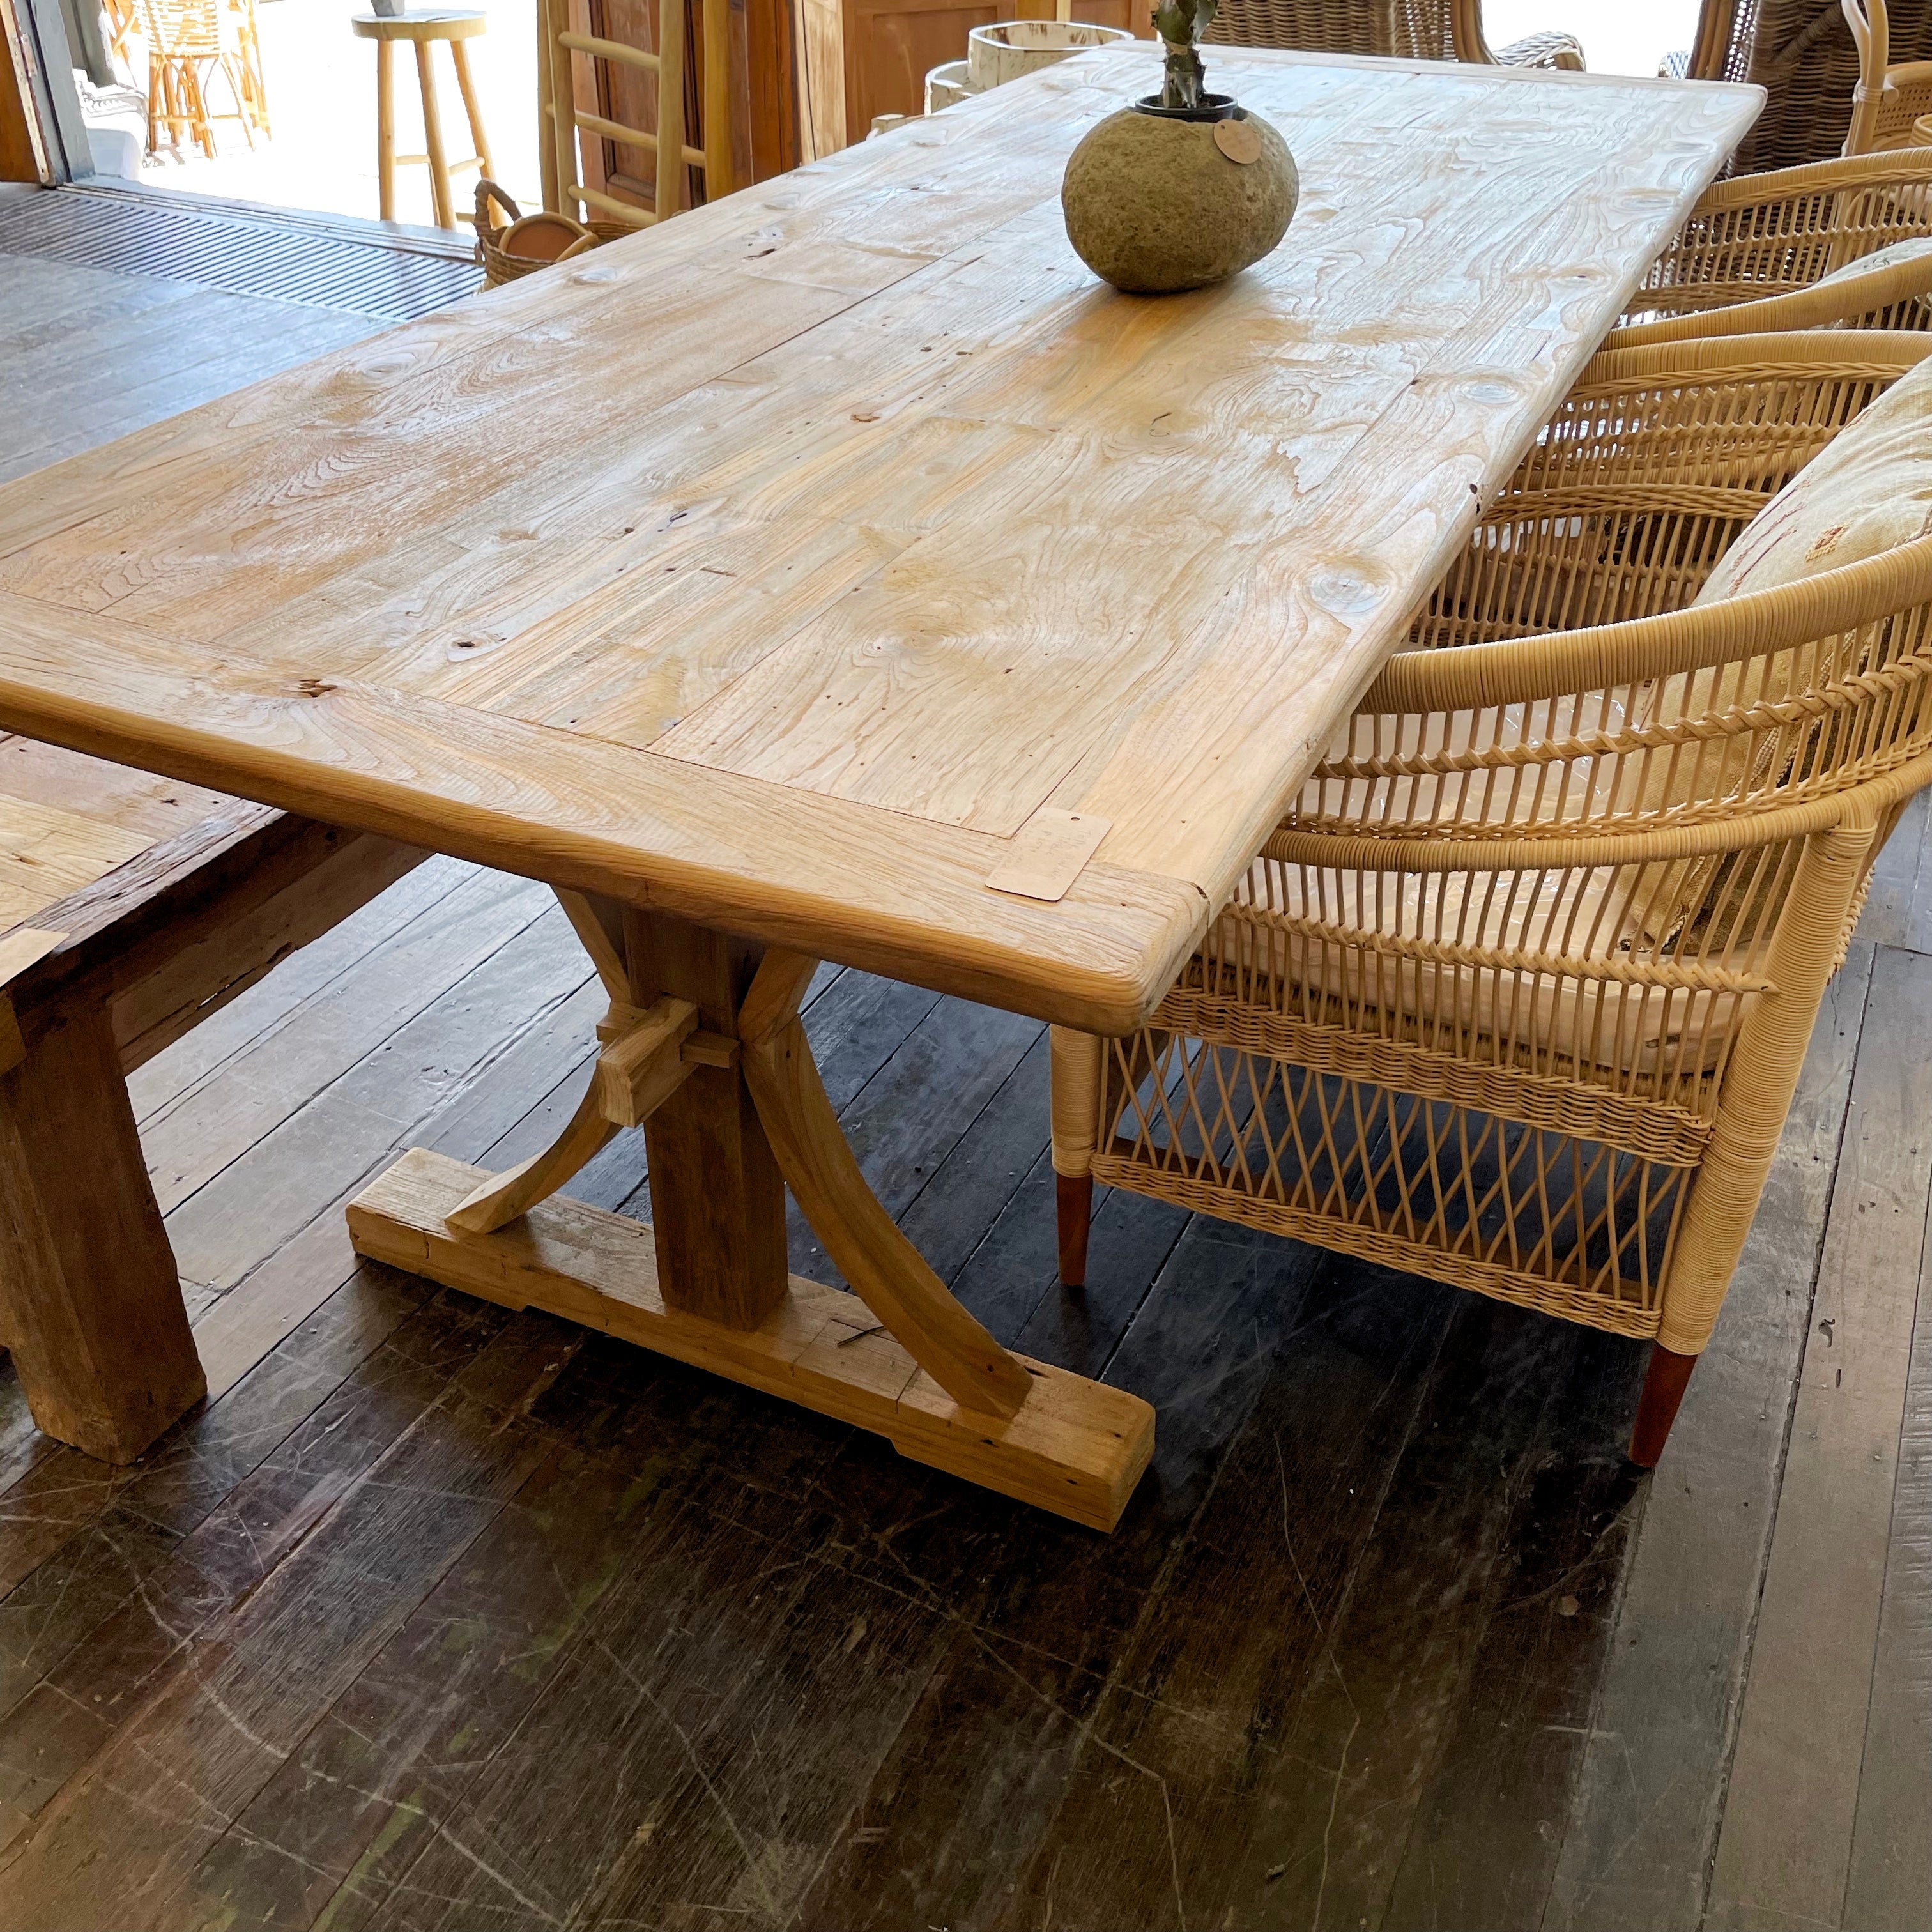 Teak Timber Curved Cross Leg Dining Table 2m x 1m